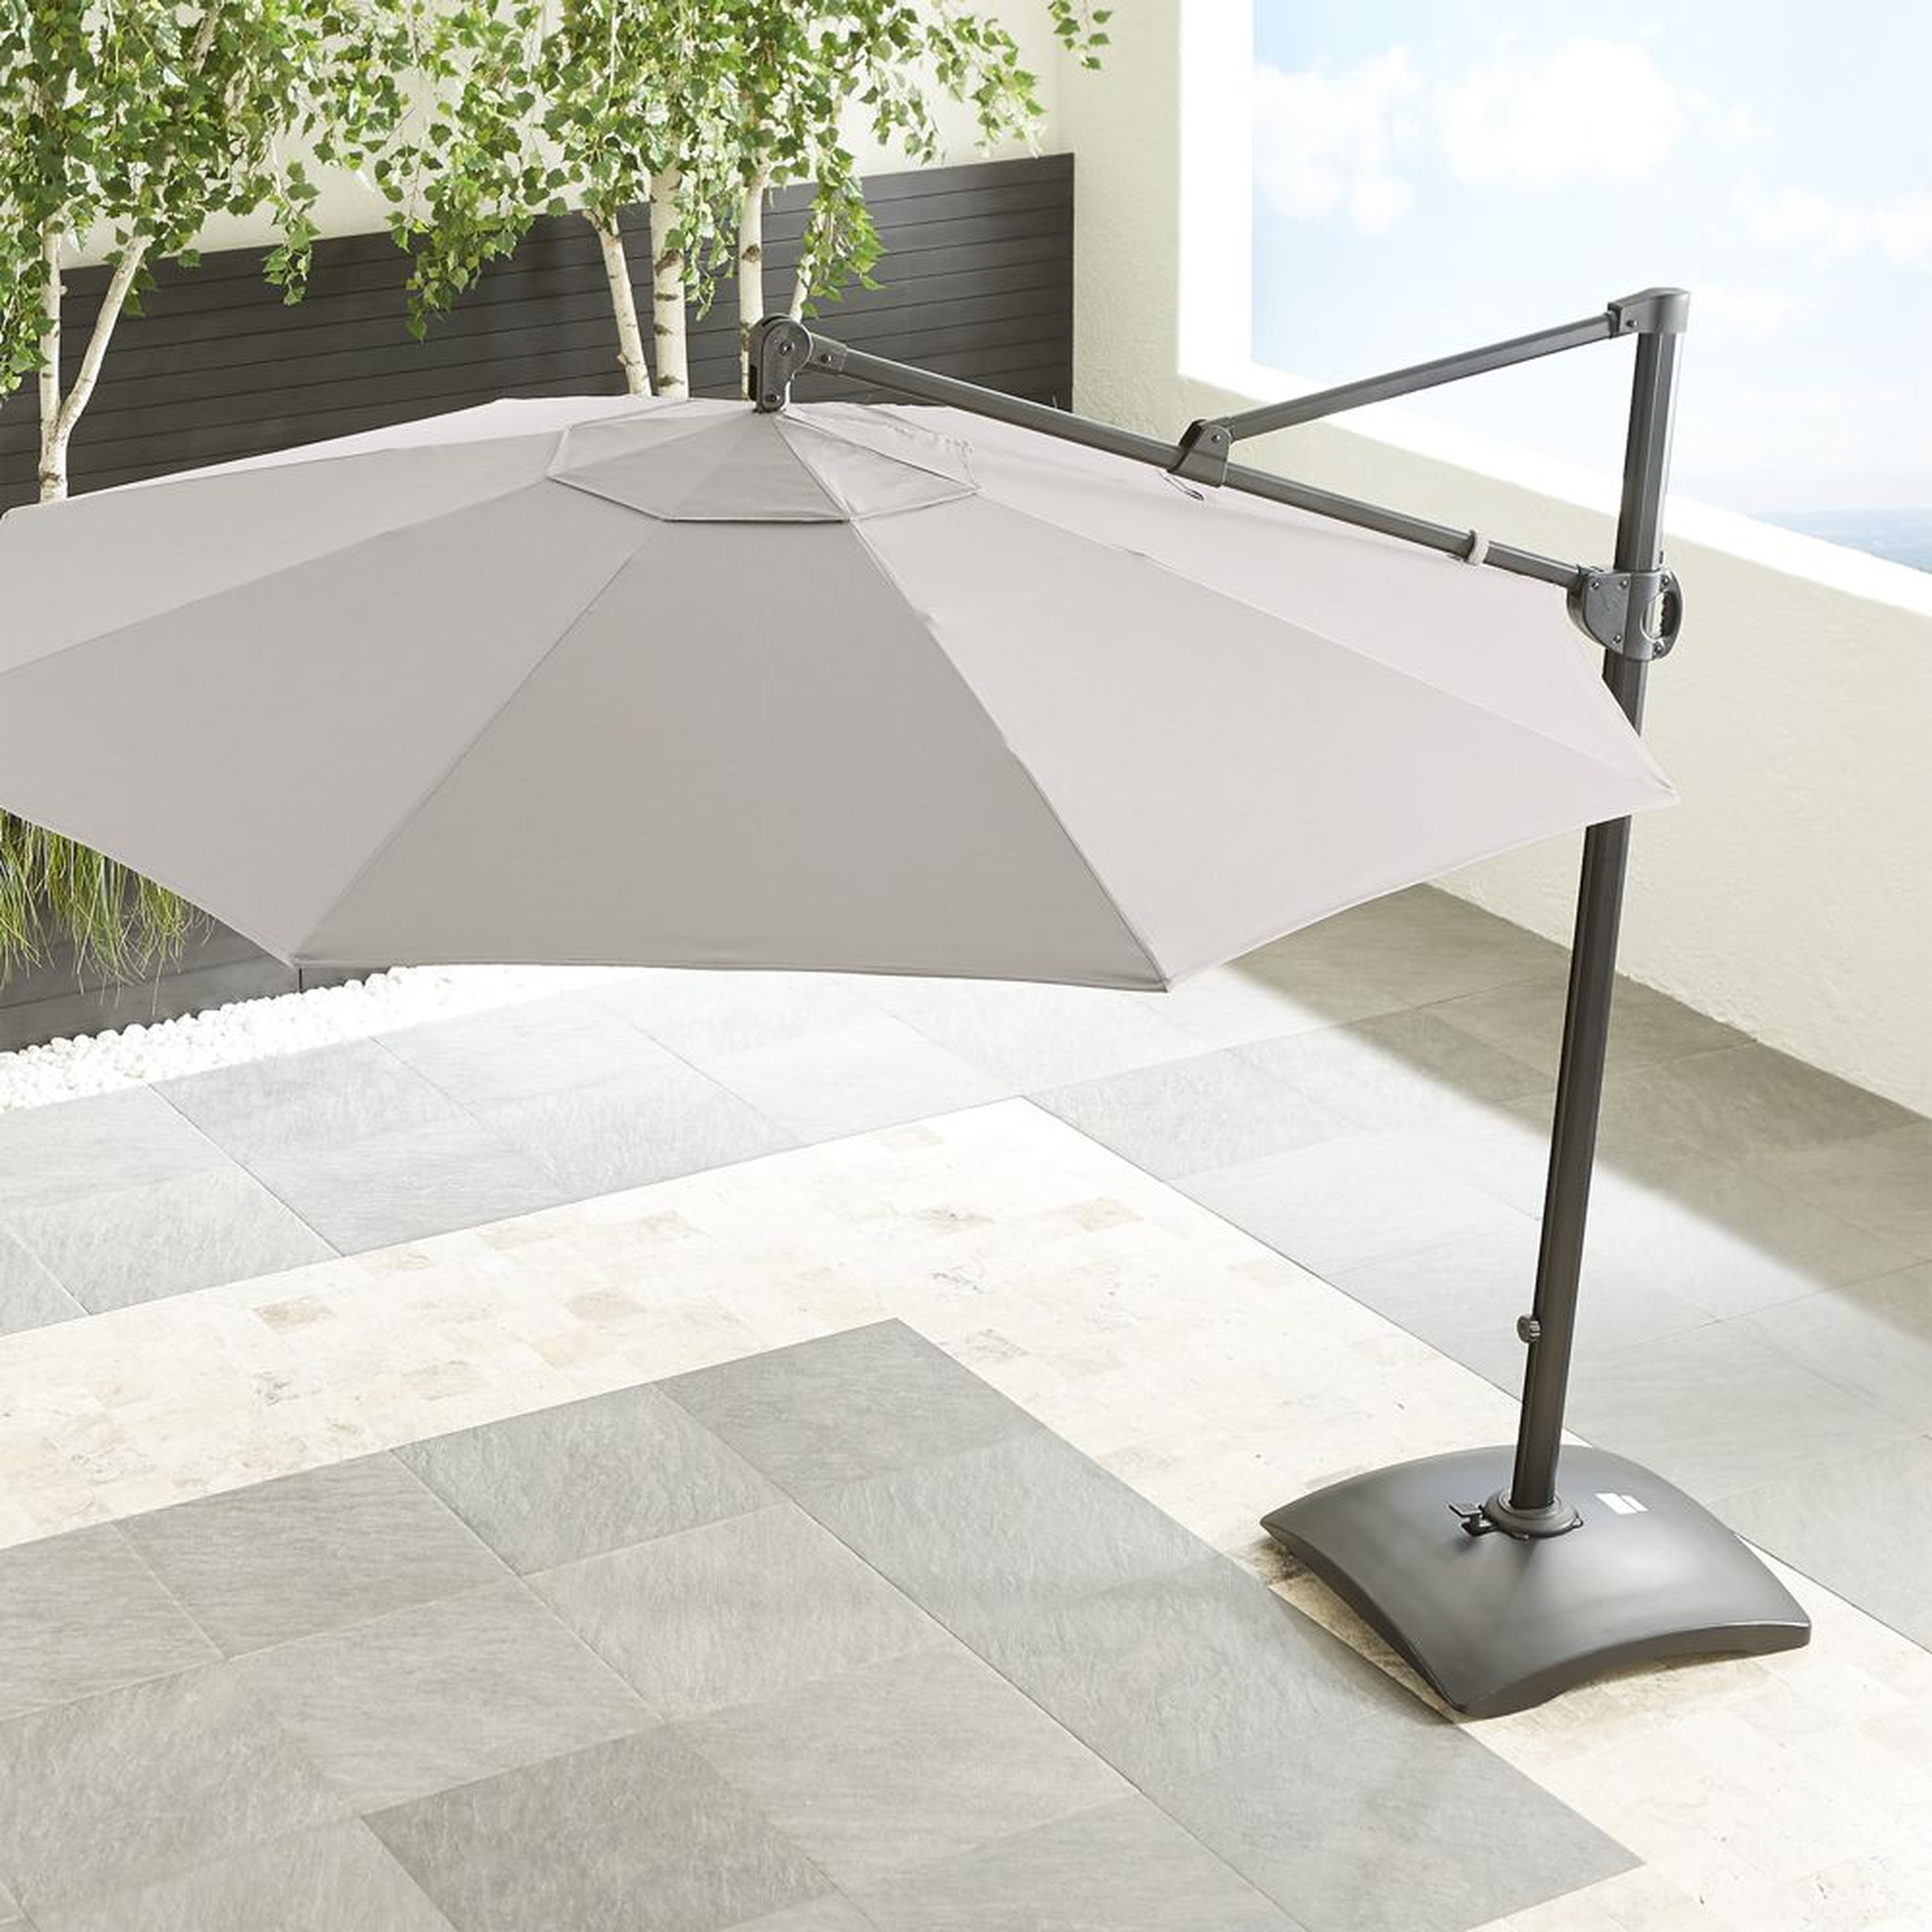 10' Sunbrella ® Silver Round Cantilever Outdoor Patio Umbrella with Base - Crate and Barrel